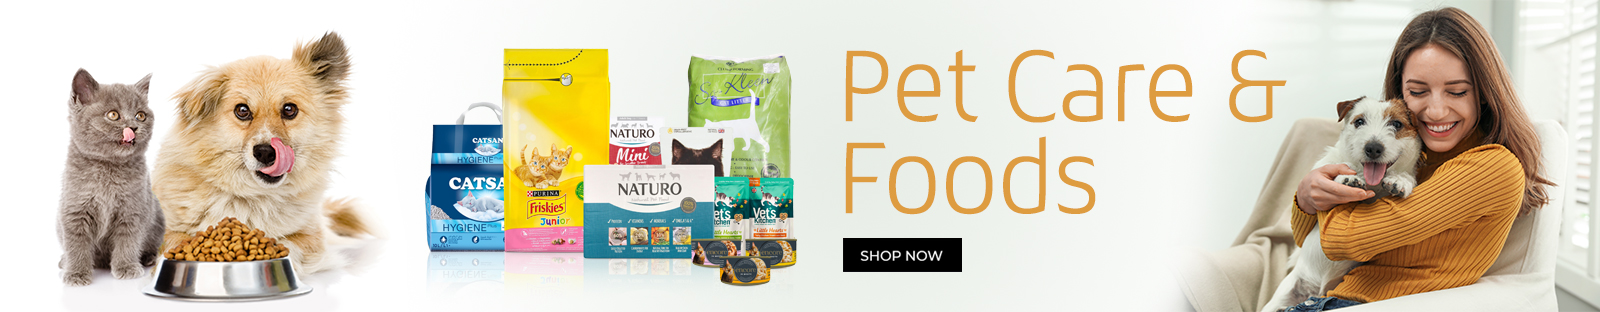 Pet-Care-&-Foods-1600x312.jpg